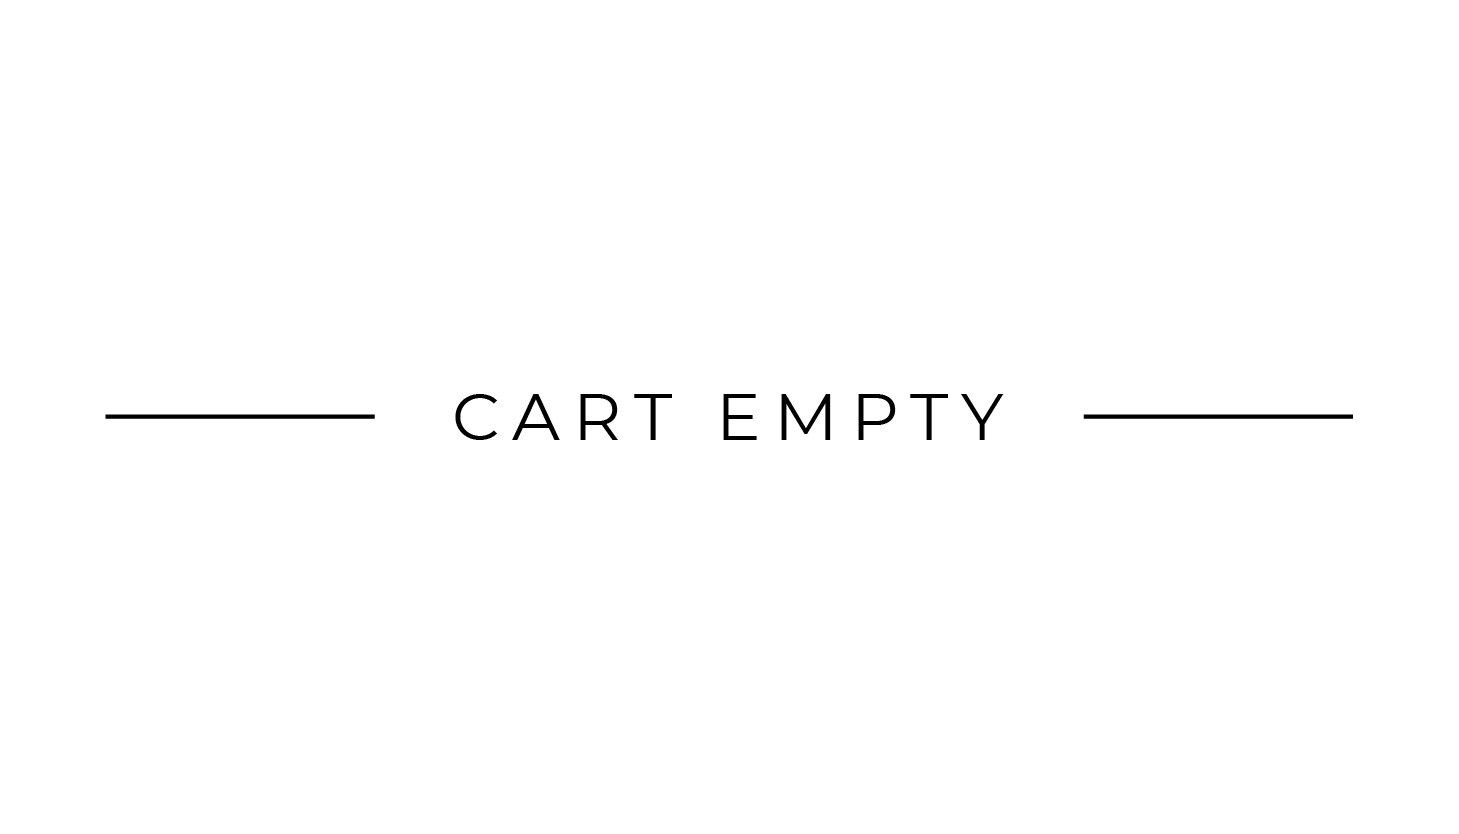 empty cart